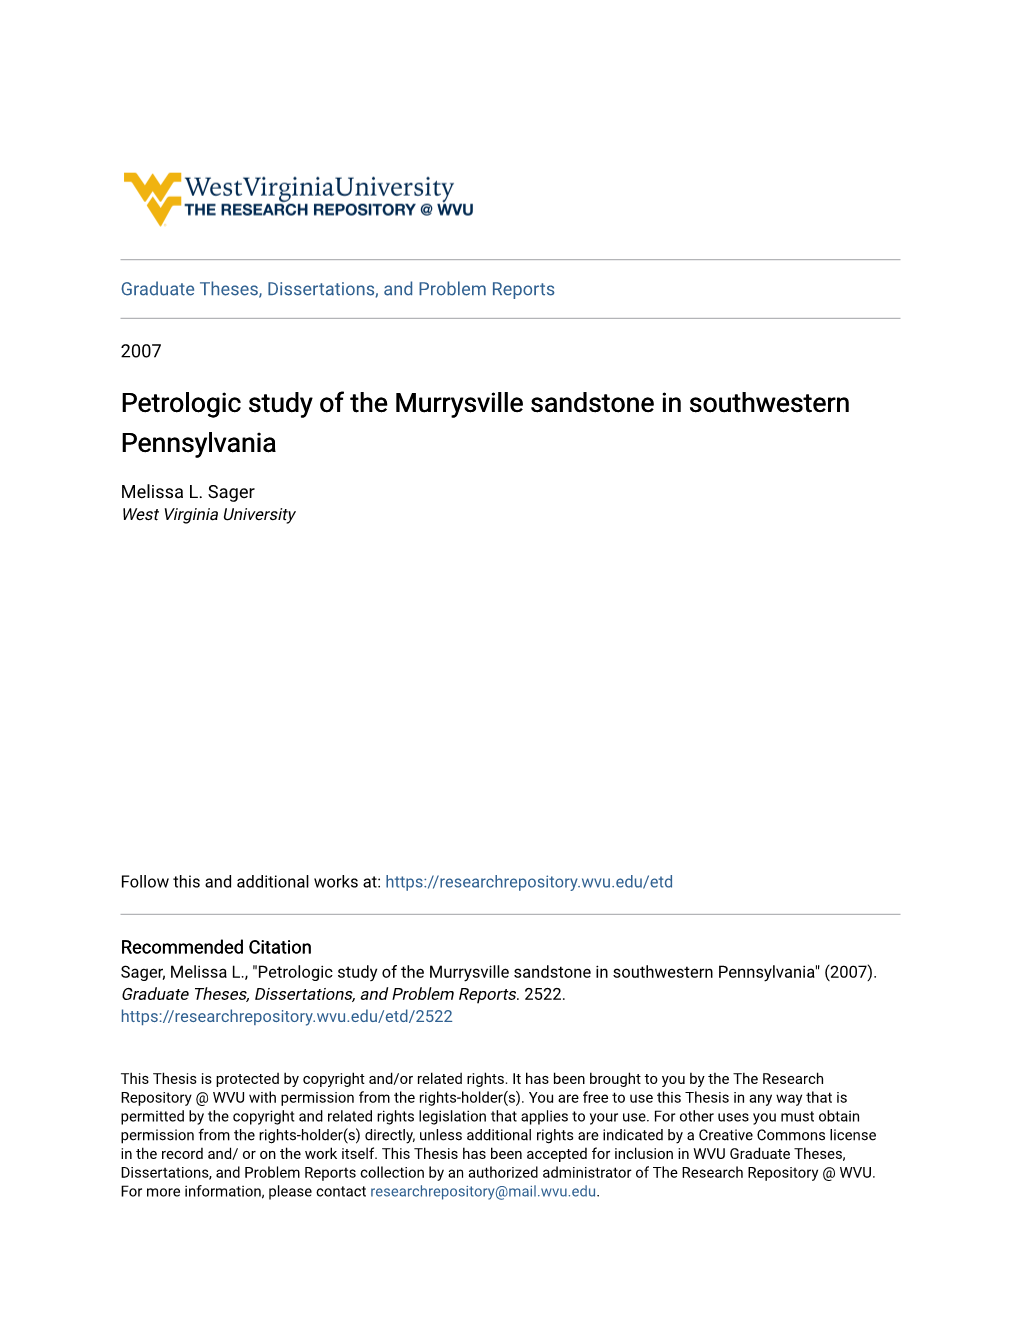 Petrologic Study of the Murrysville Sandstone in Southwestern Pennsylvania